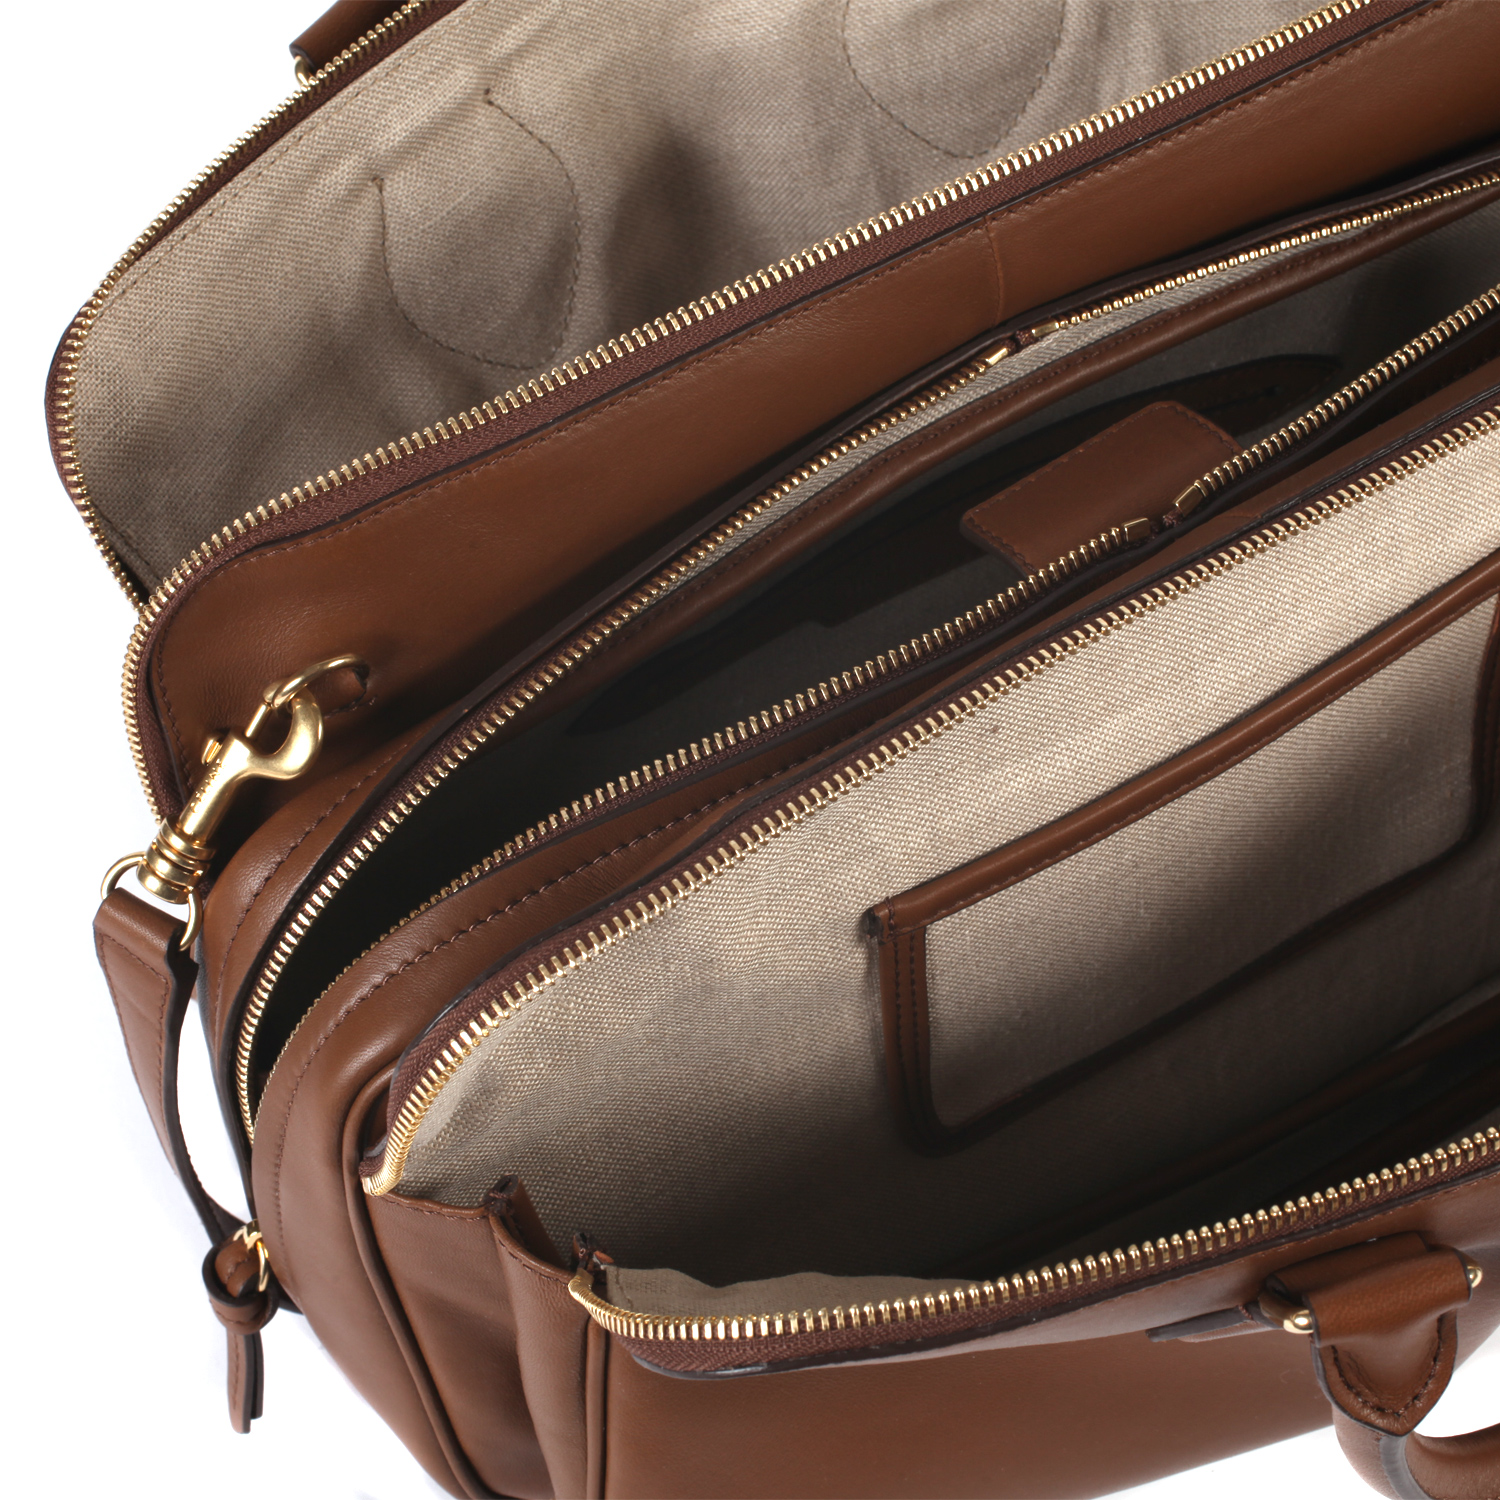 buy celine bag online usa - Cline Small Satchel Triptyque Lambskin Bag in Red | Lyst